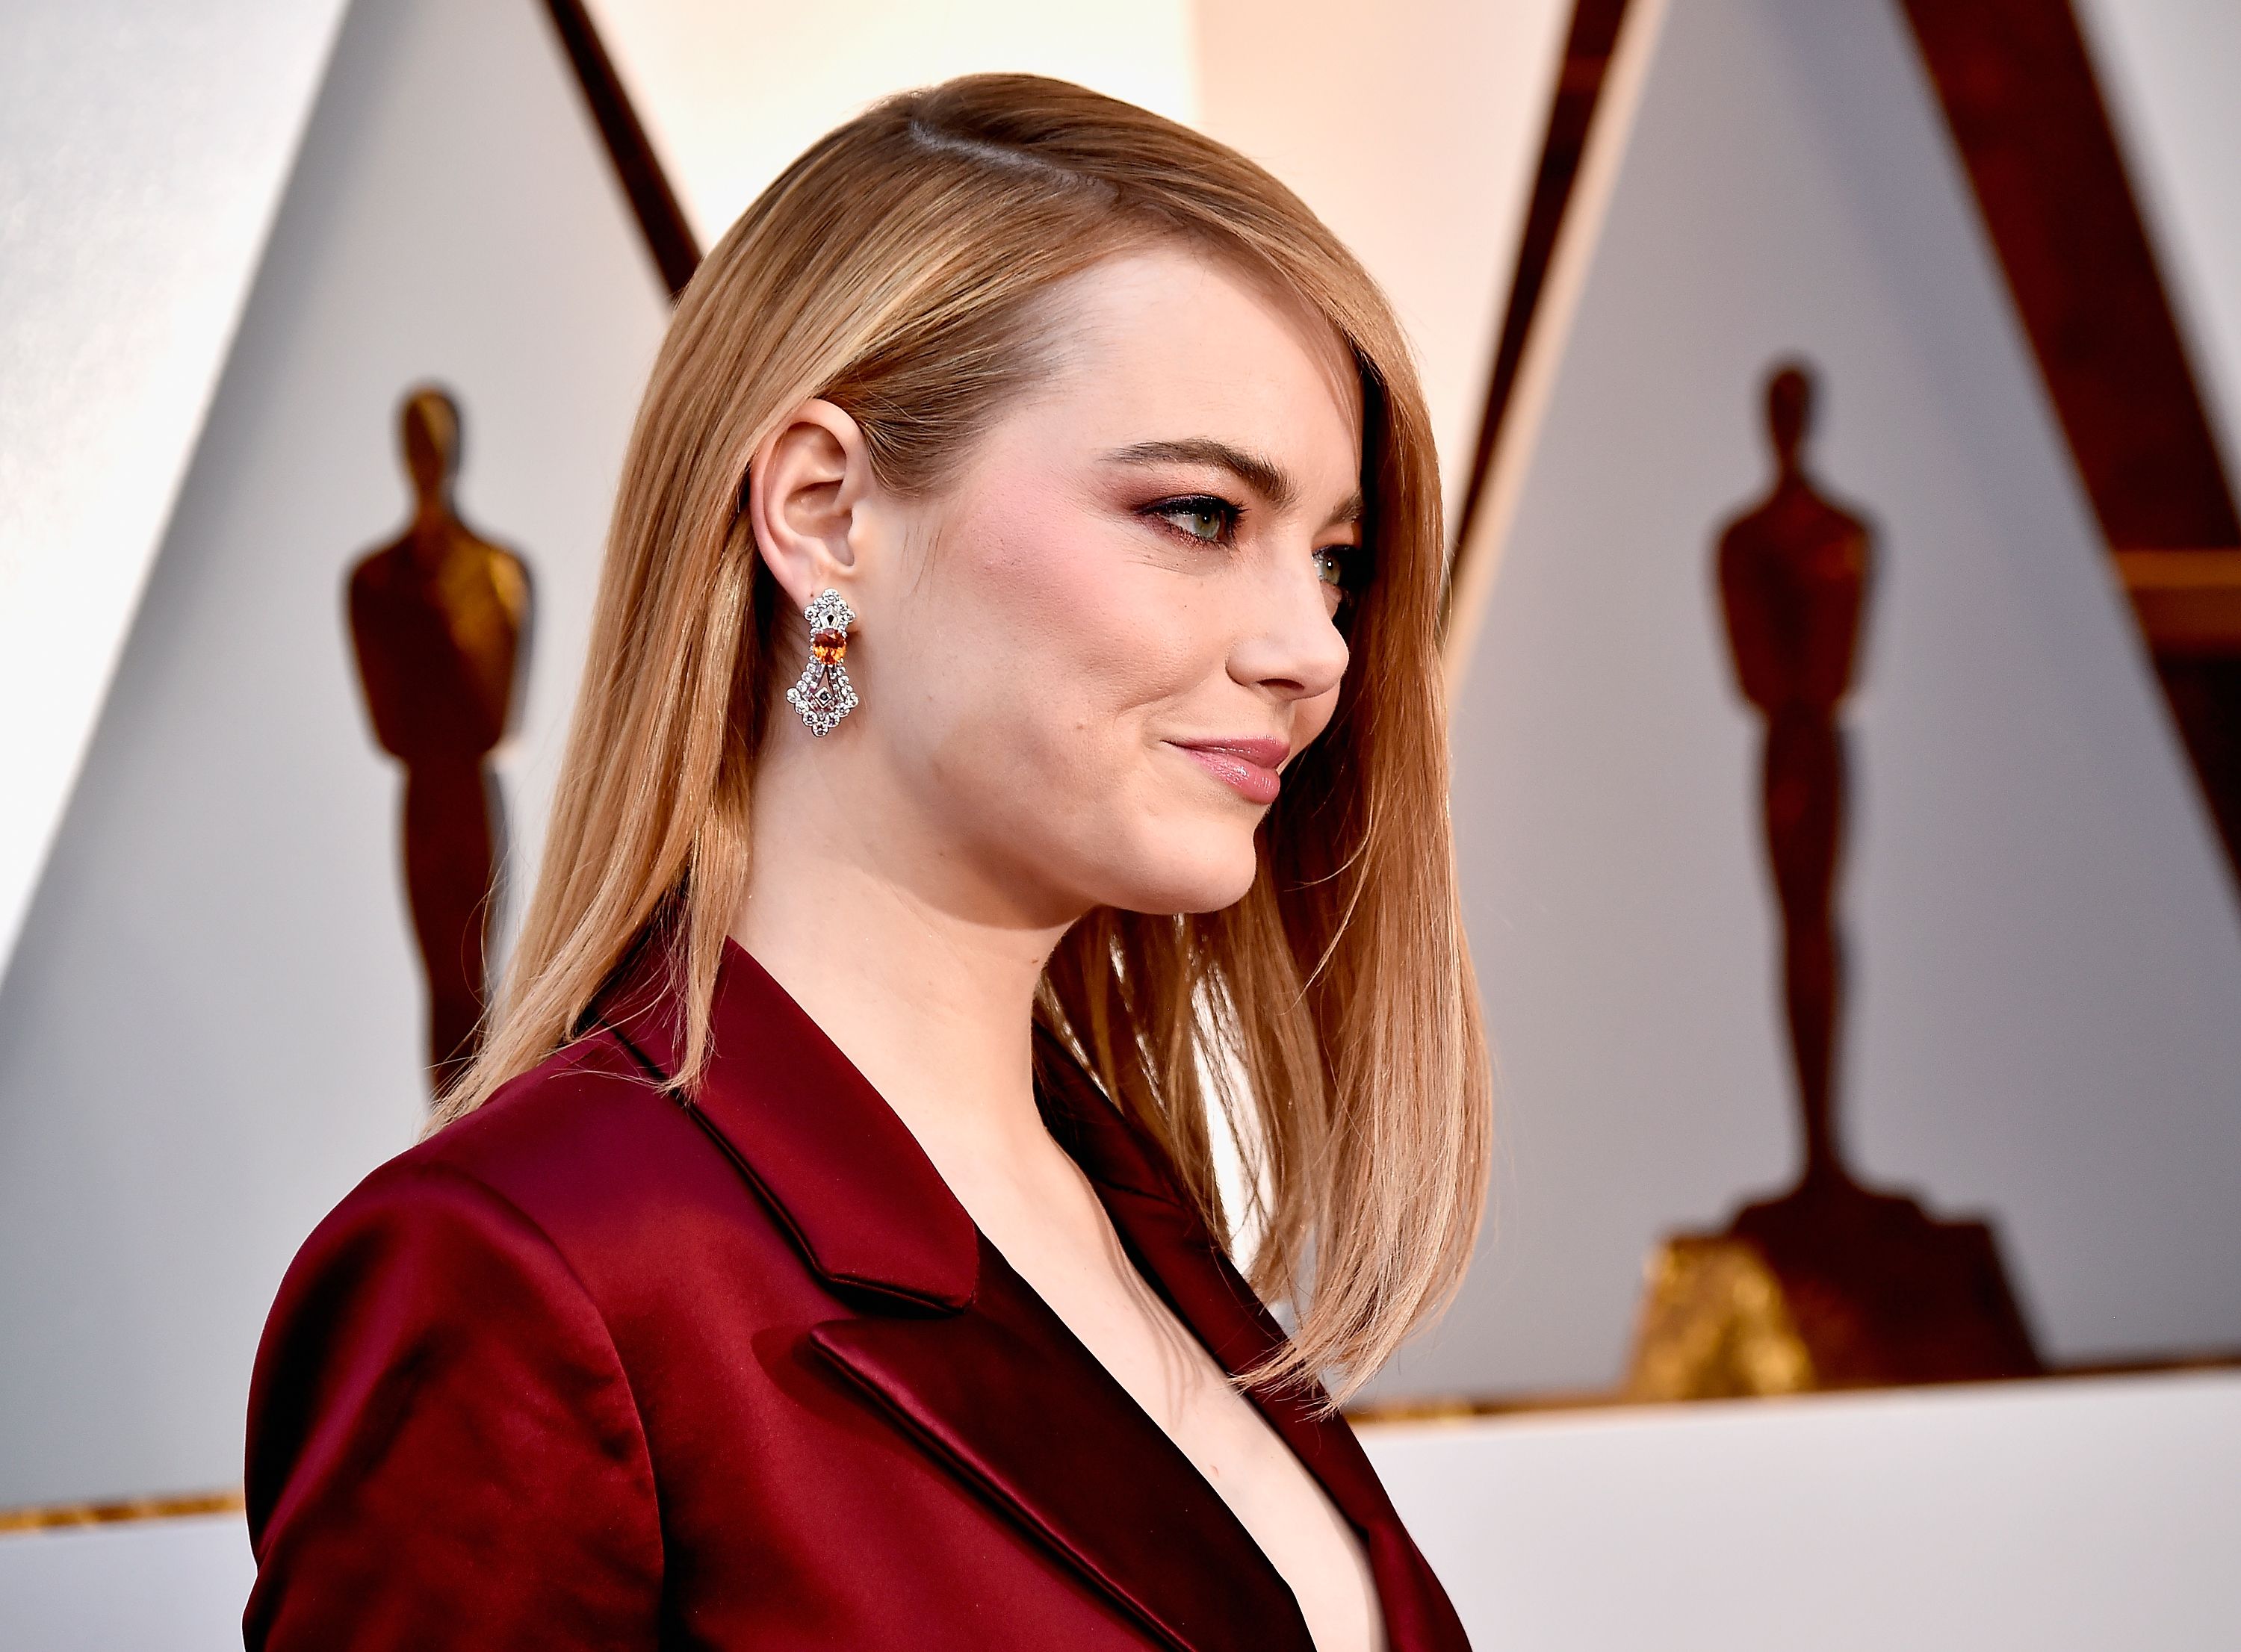 Emma Stone Rocks Chic Pantsuit at Oscars 2018!: Photo 4044120